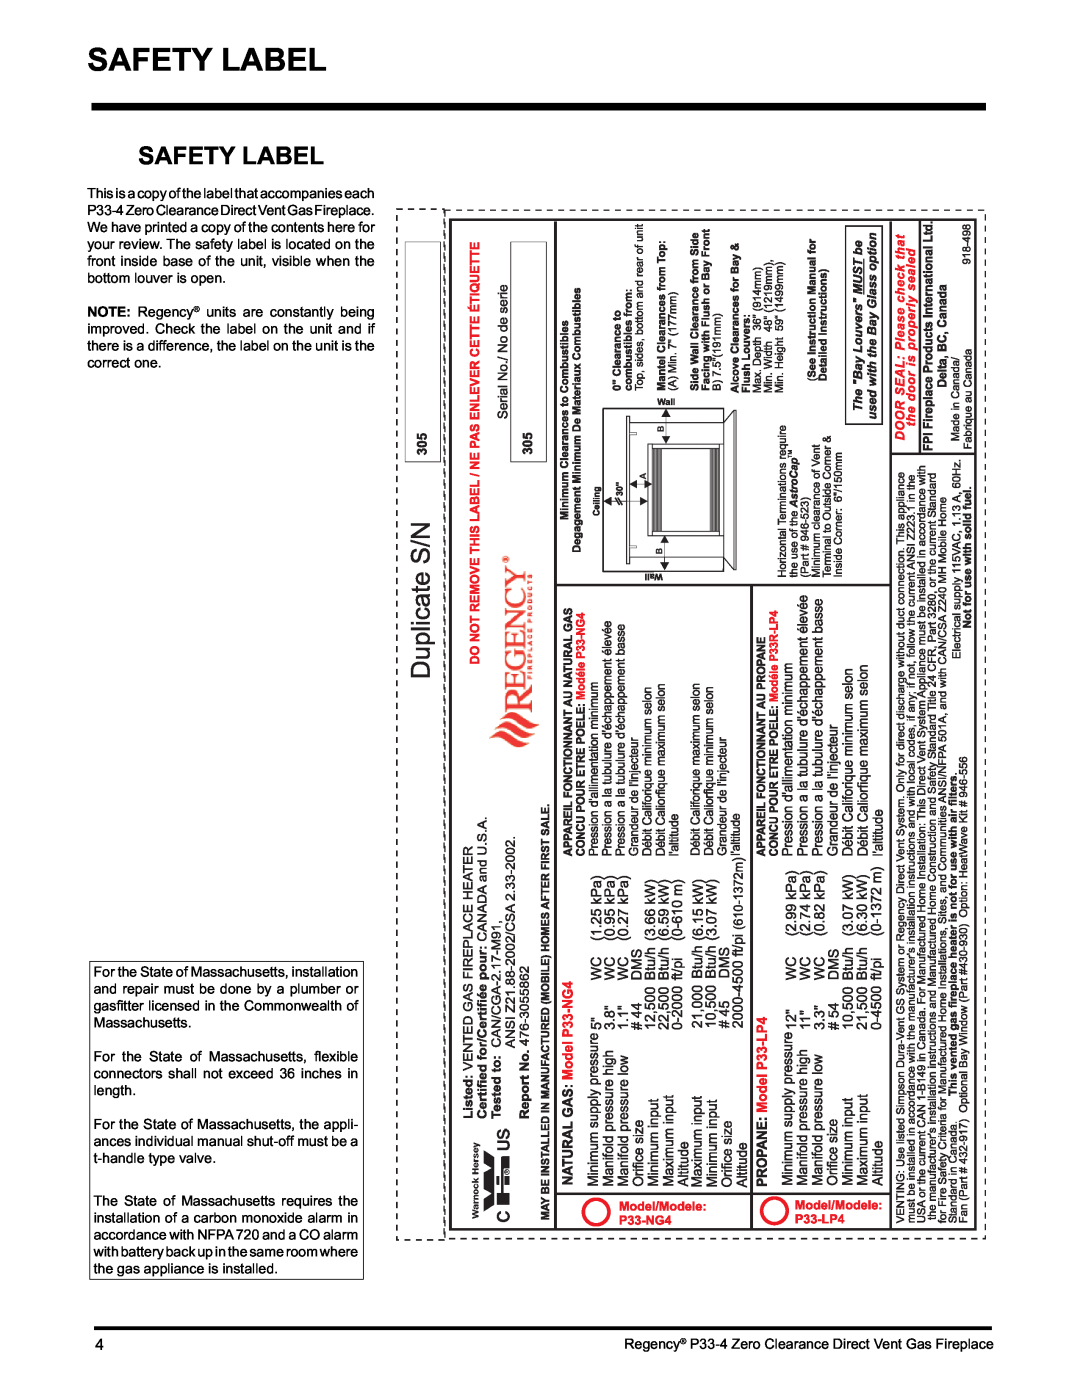 Regency P33-LP4 installation manual Safety Label 